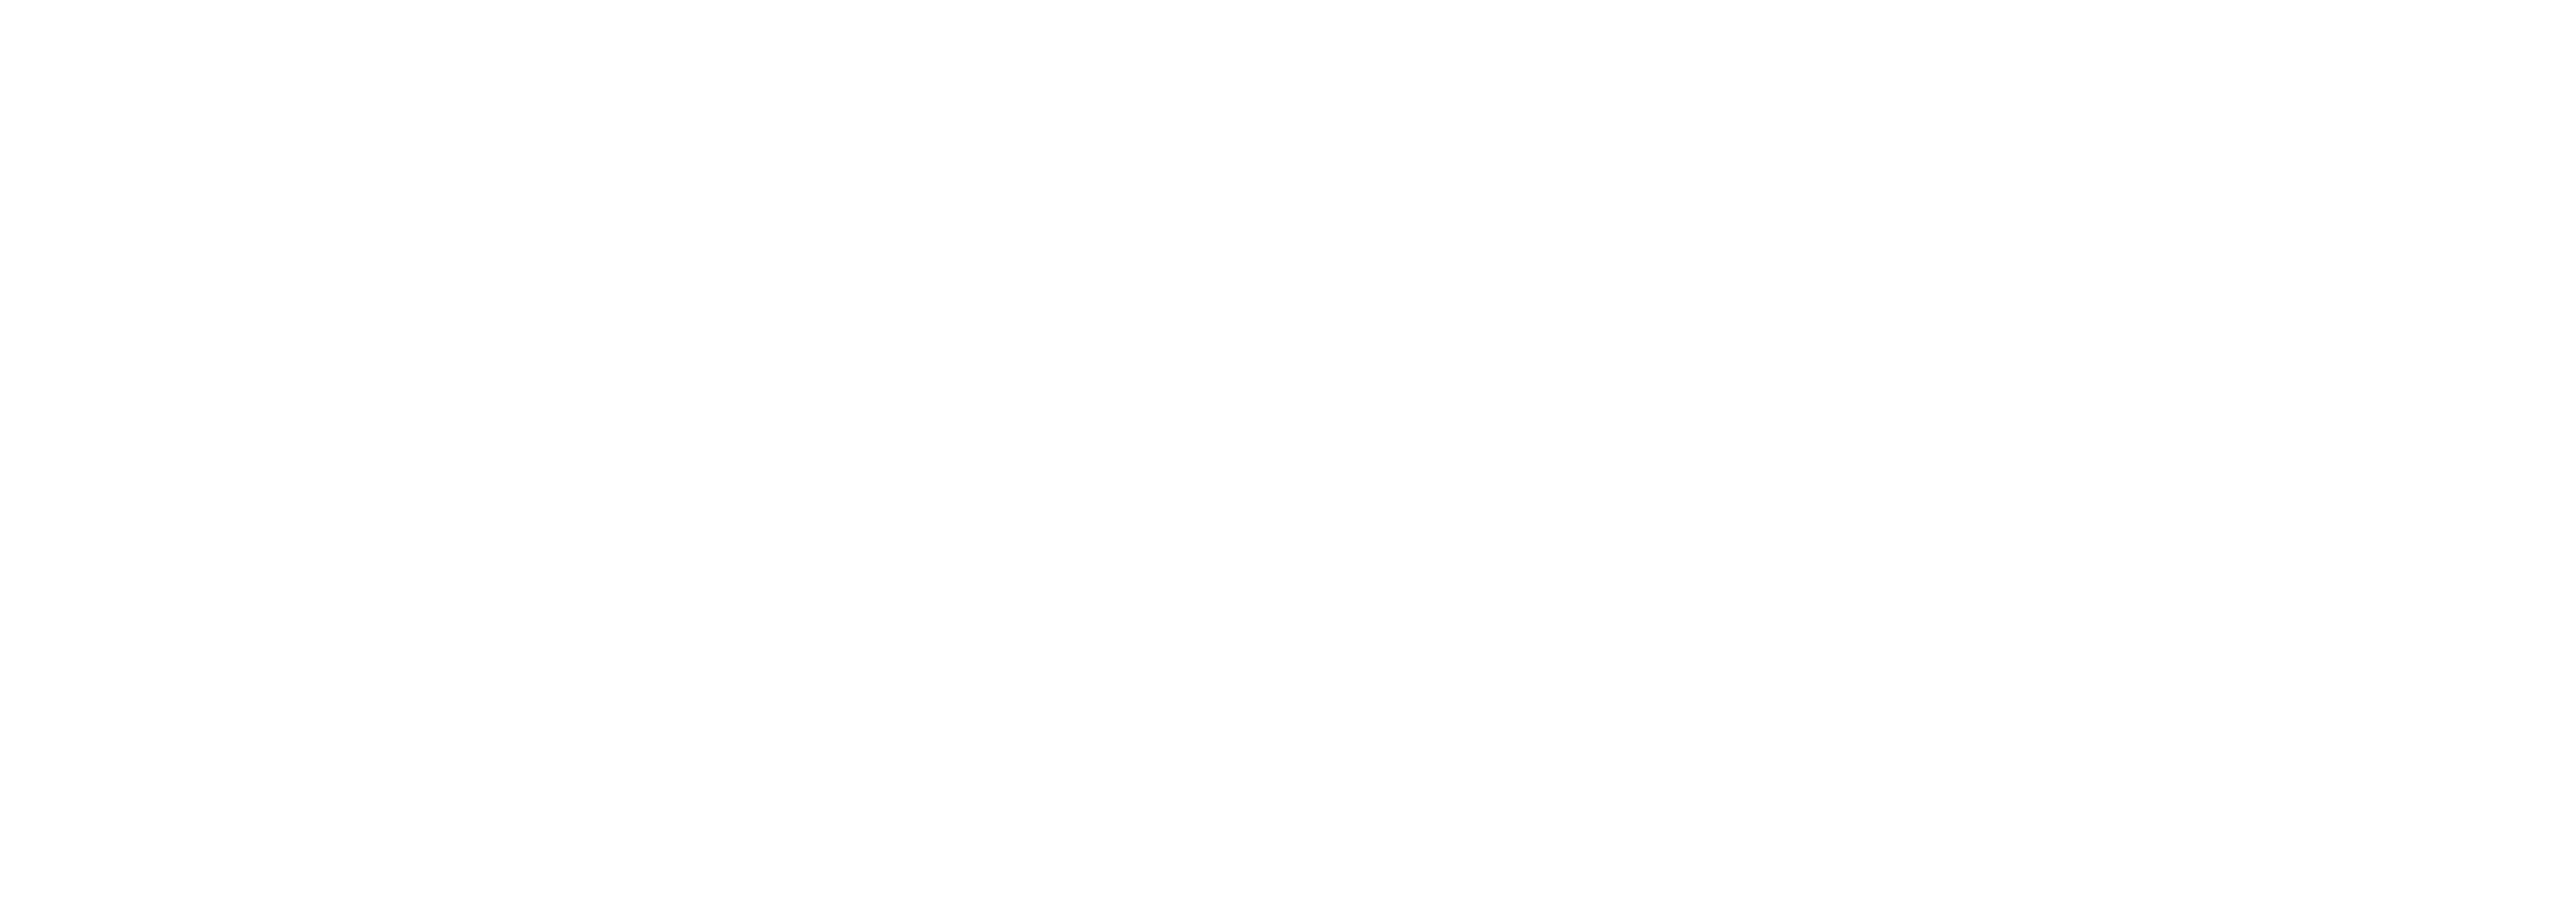 2019 BBBSHH AGM_WEB - Big Brothers Big Sisters of Halton and Hamilton